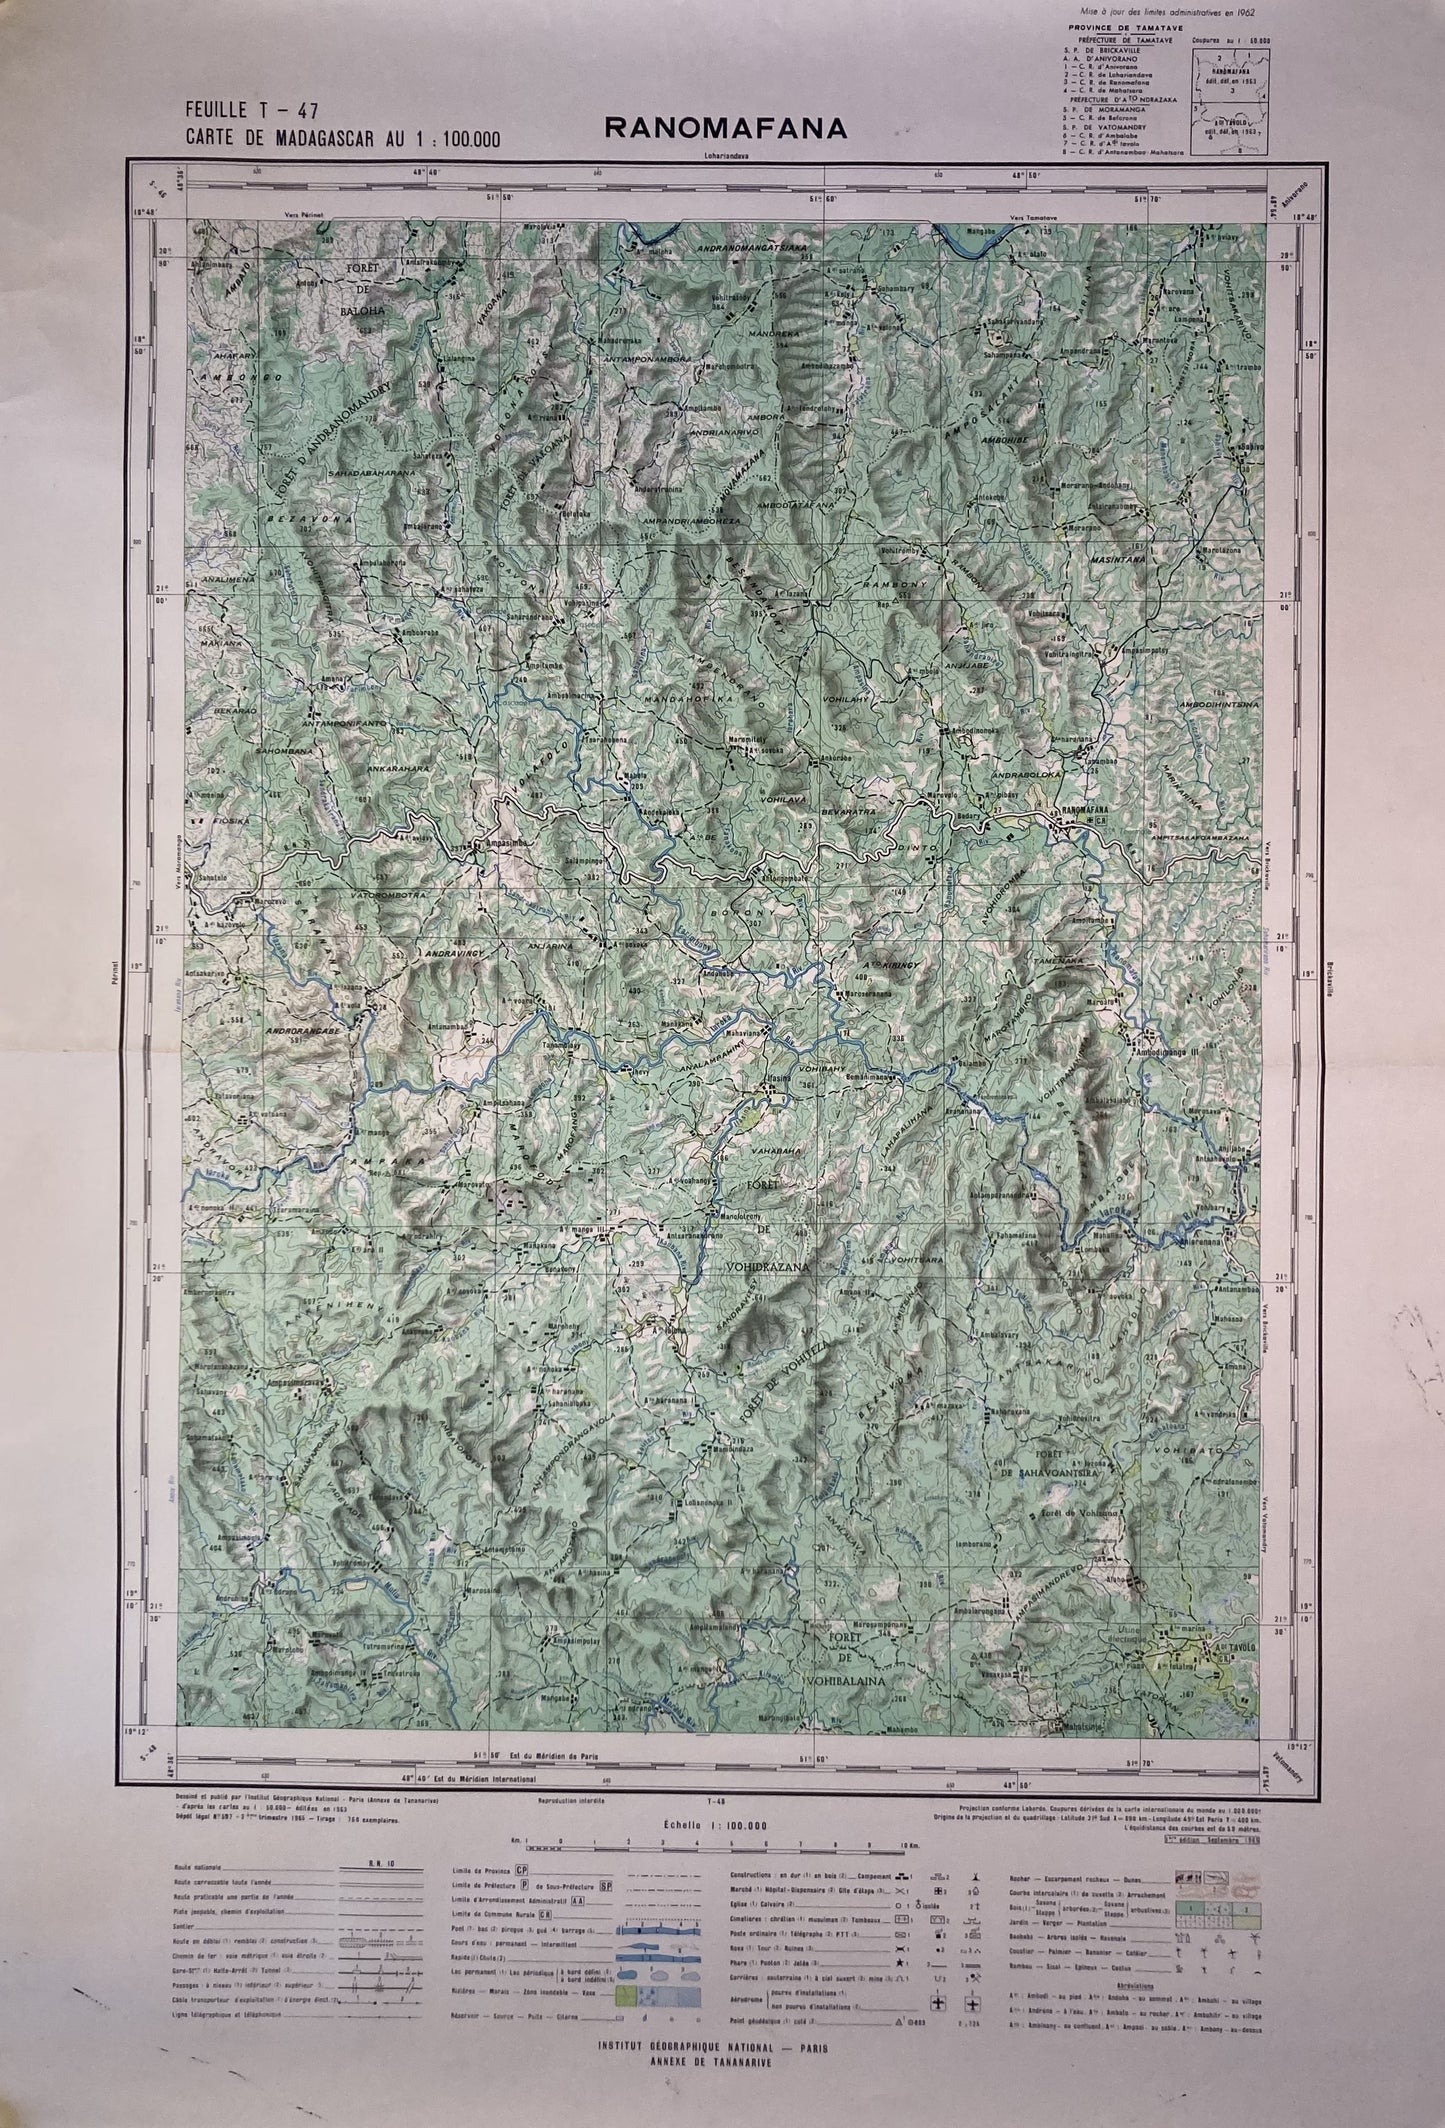 Carte ancienne de Madagascar, région de Ranomafana